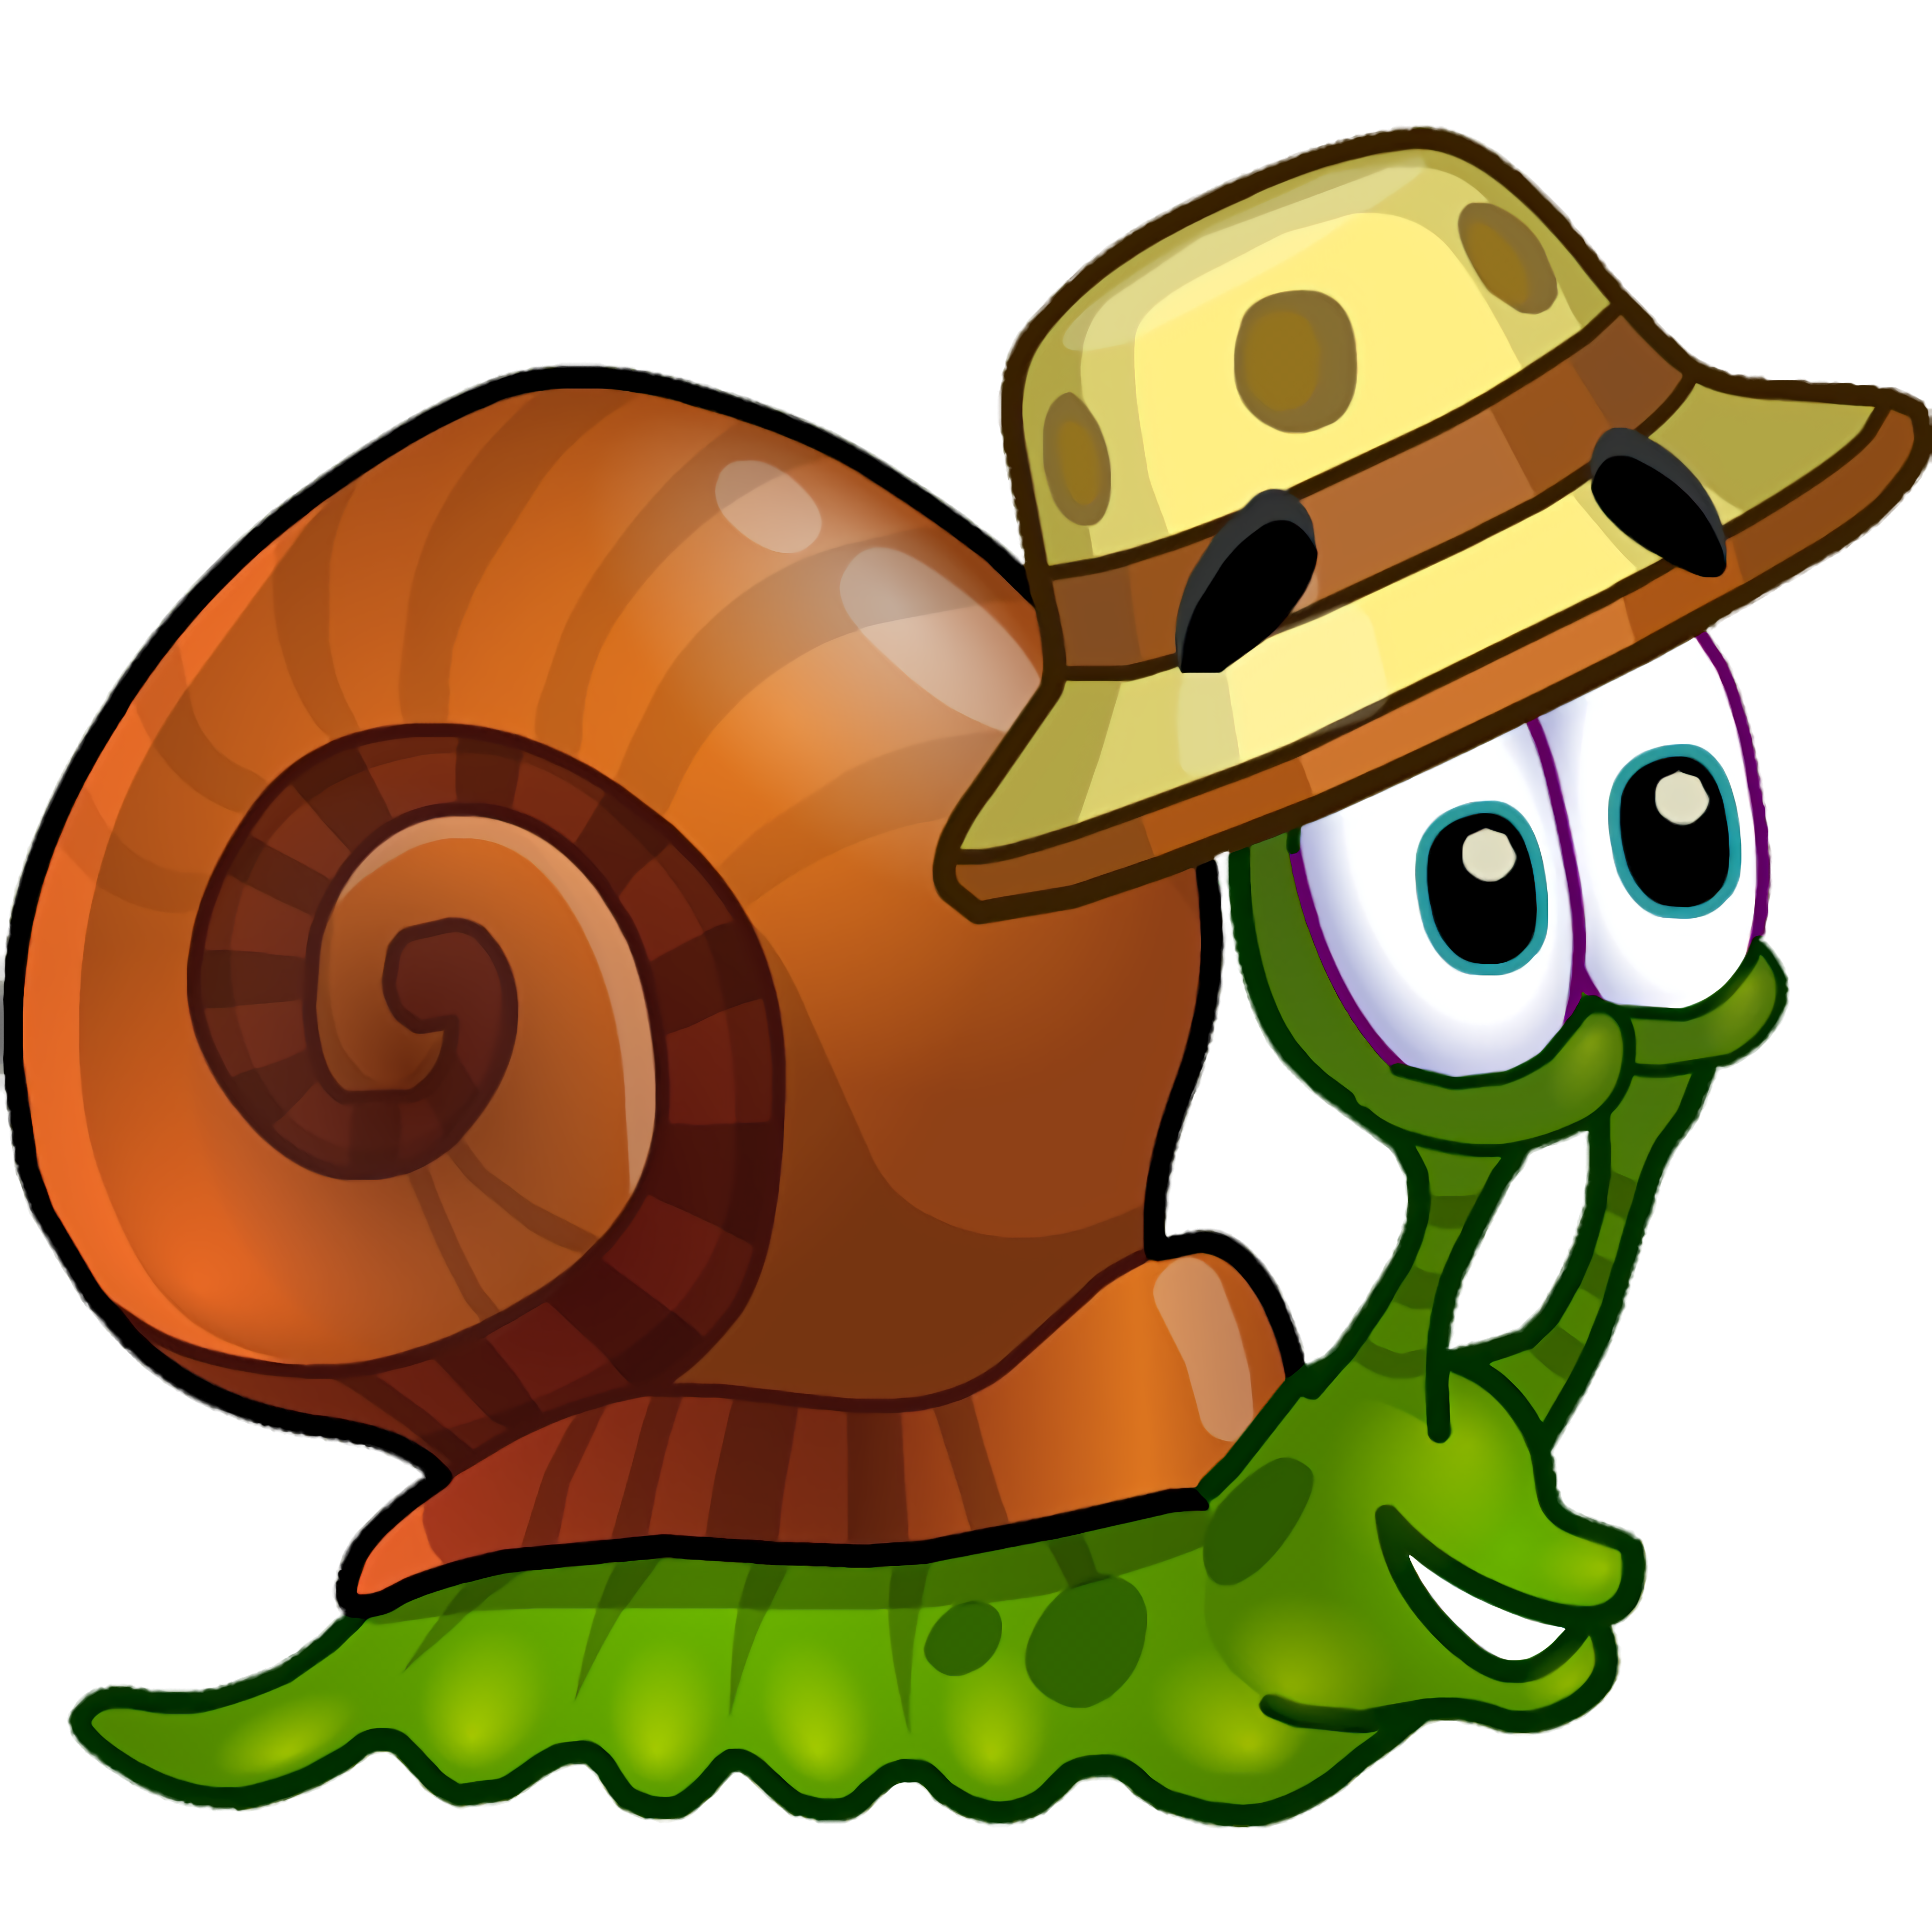 Улитка боб 1 3. Улитка Боб 3 (Snail Bob 3). Снаил Боб. Snail Bob 2 (улитка Боб 2). Snail Bob (улитка Боб) 6.